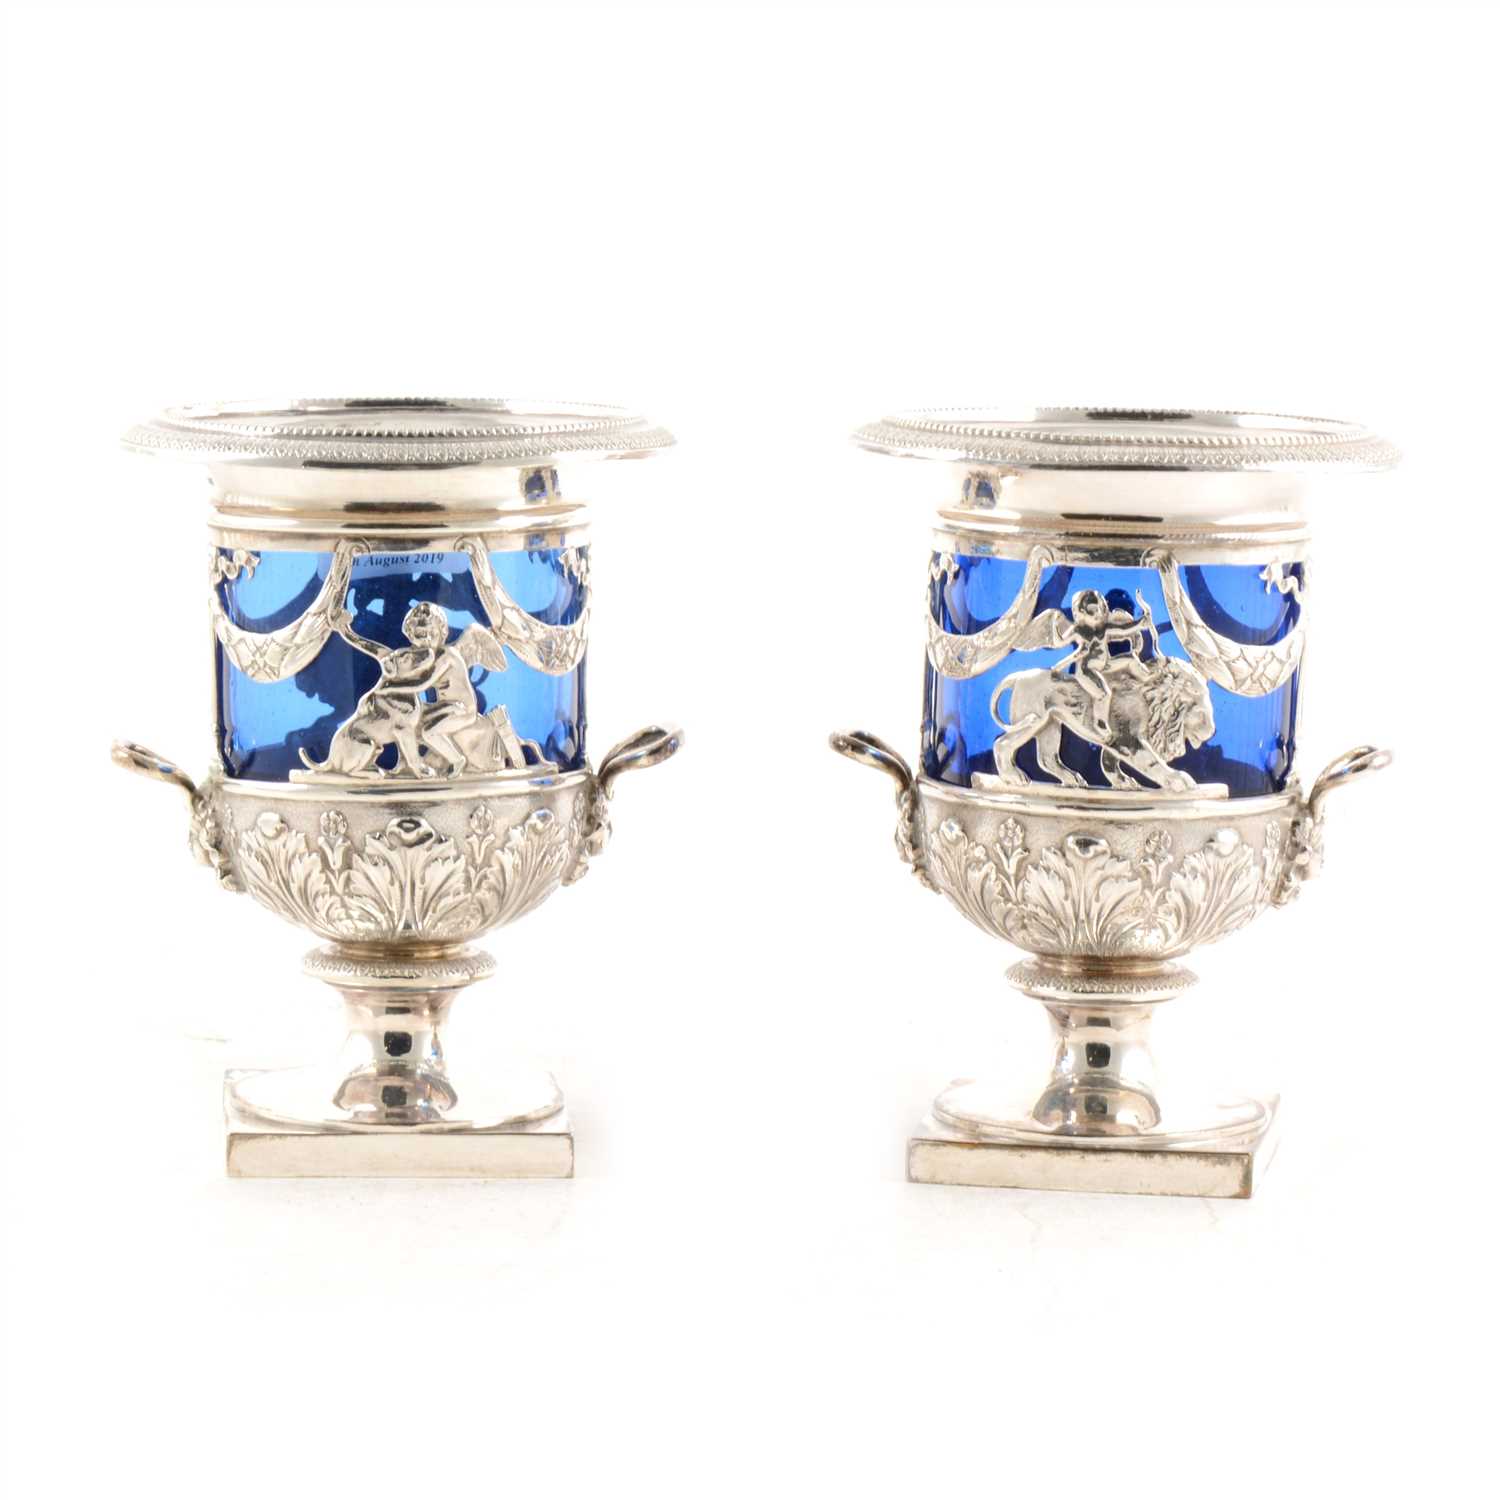 Lot 119 - Pair of German silver campana shape sugar baskets, 930 standard